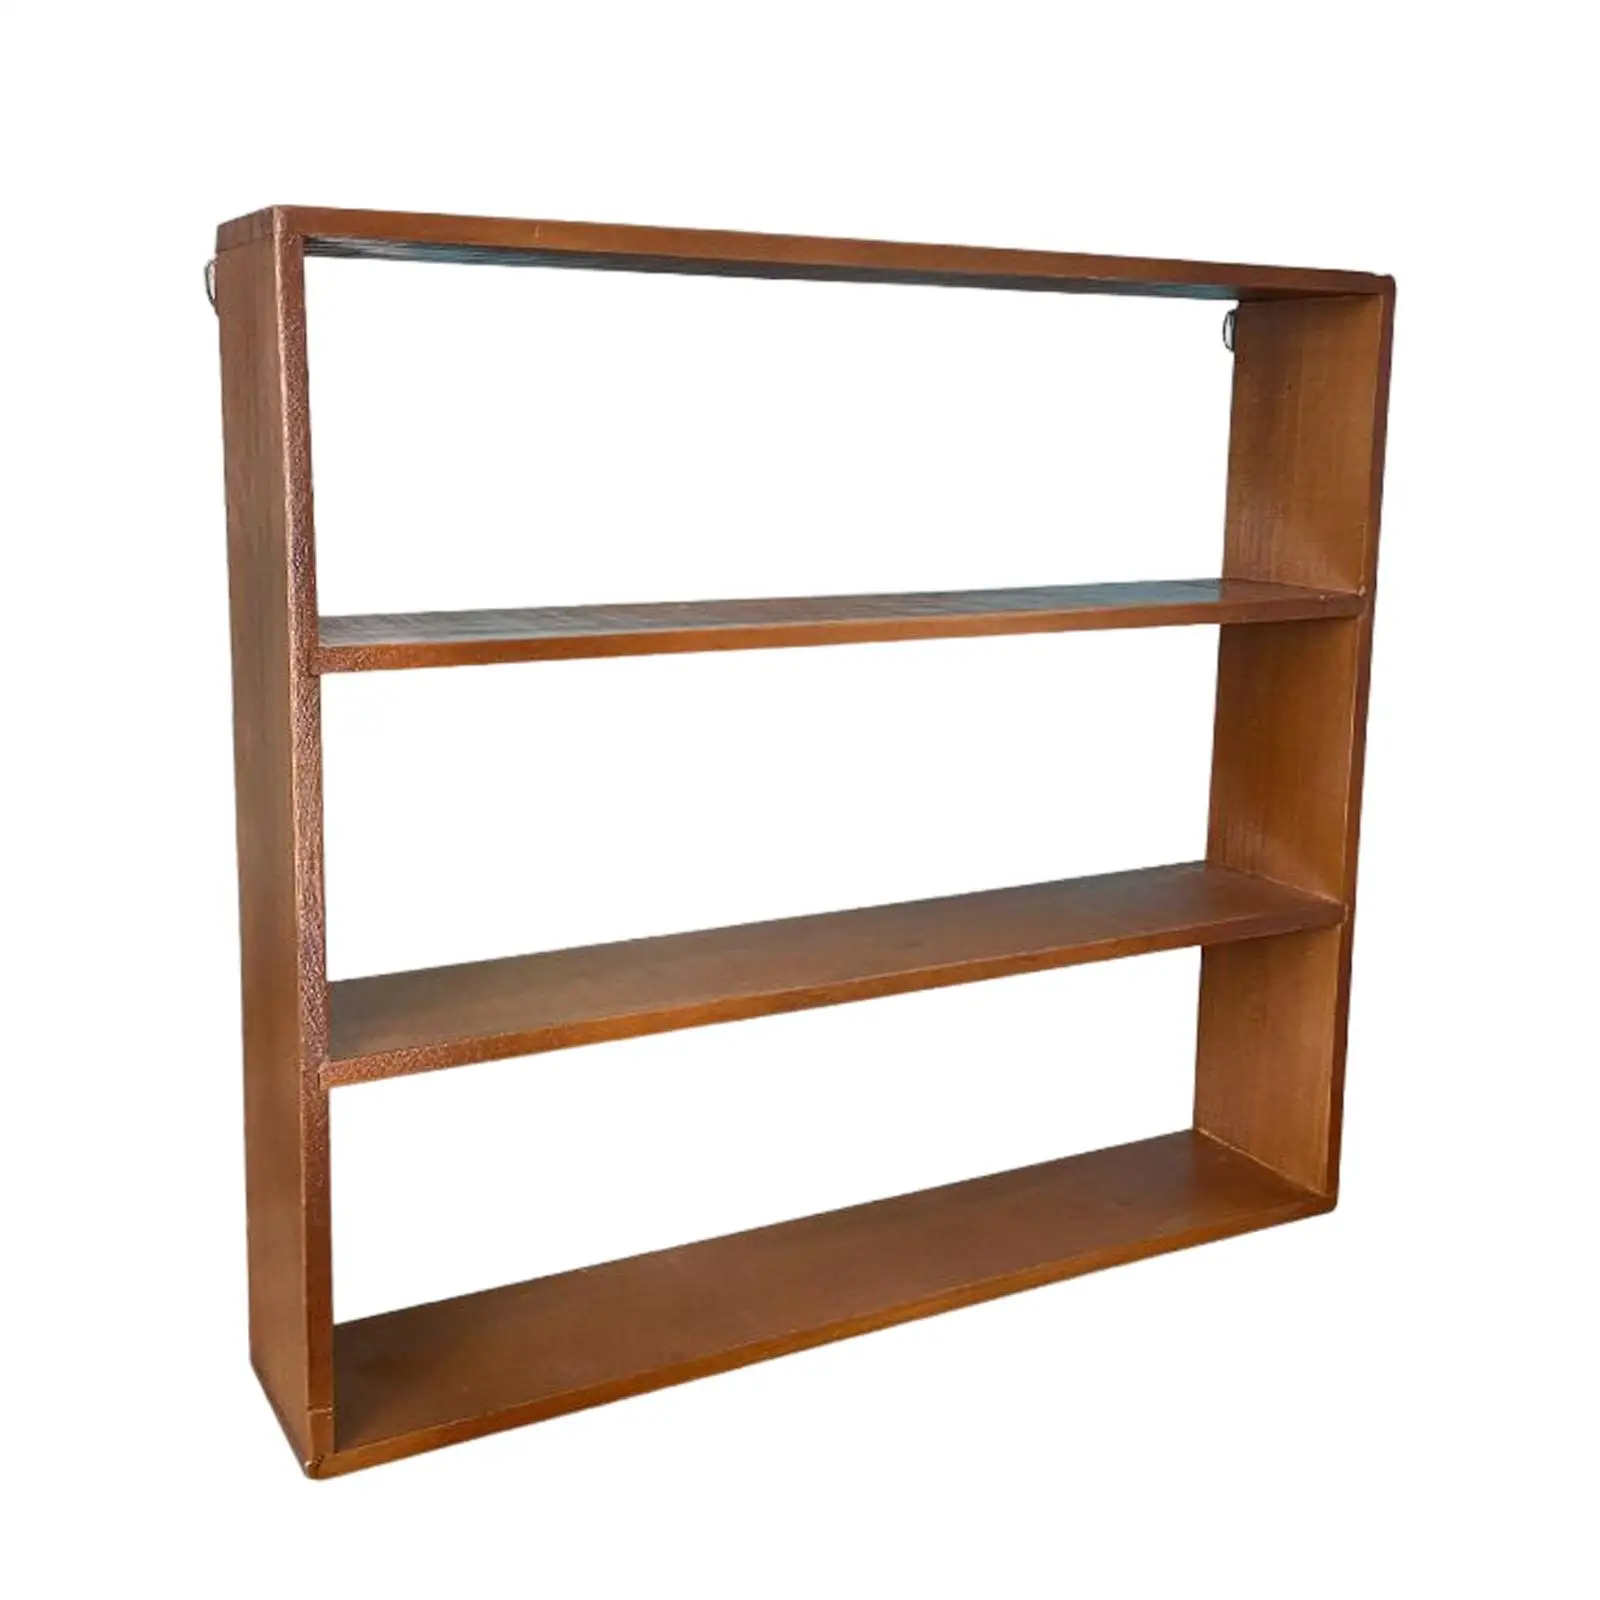 Wood Display Shelf Organizer Collectibles Display Shelf for Collectibles